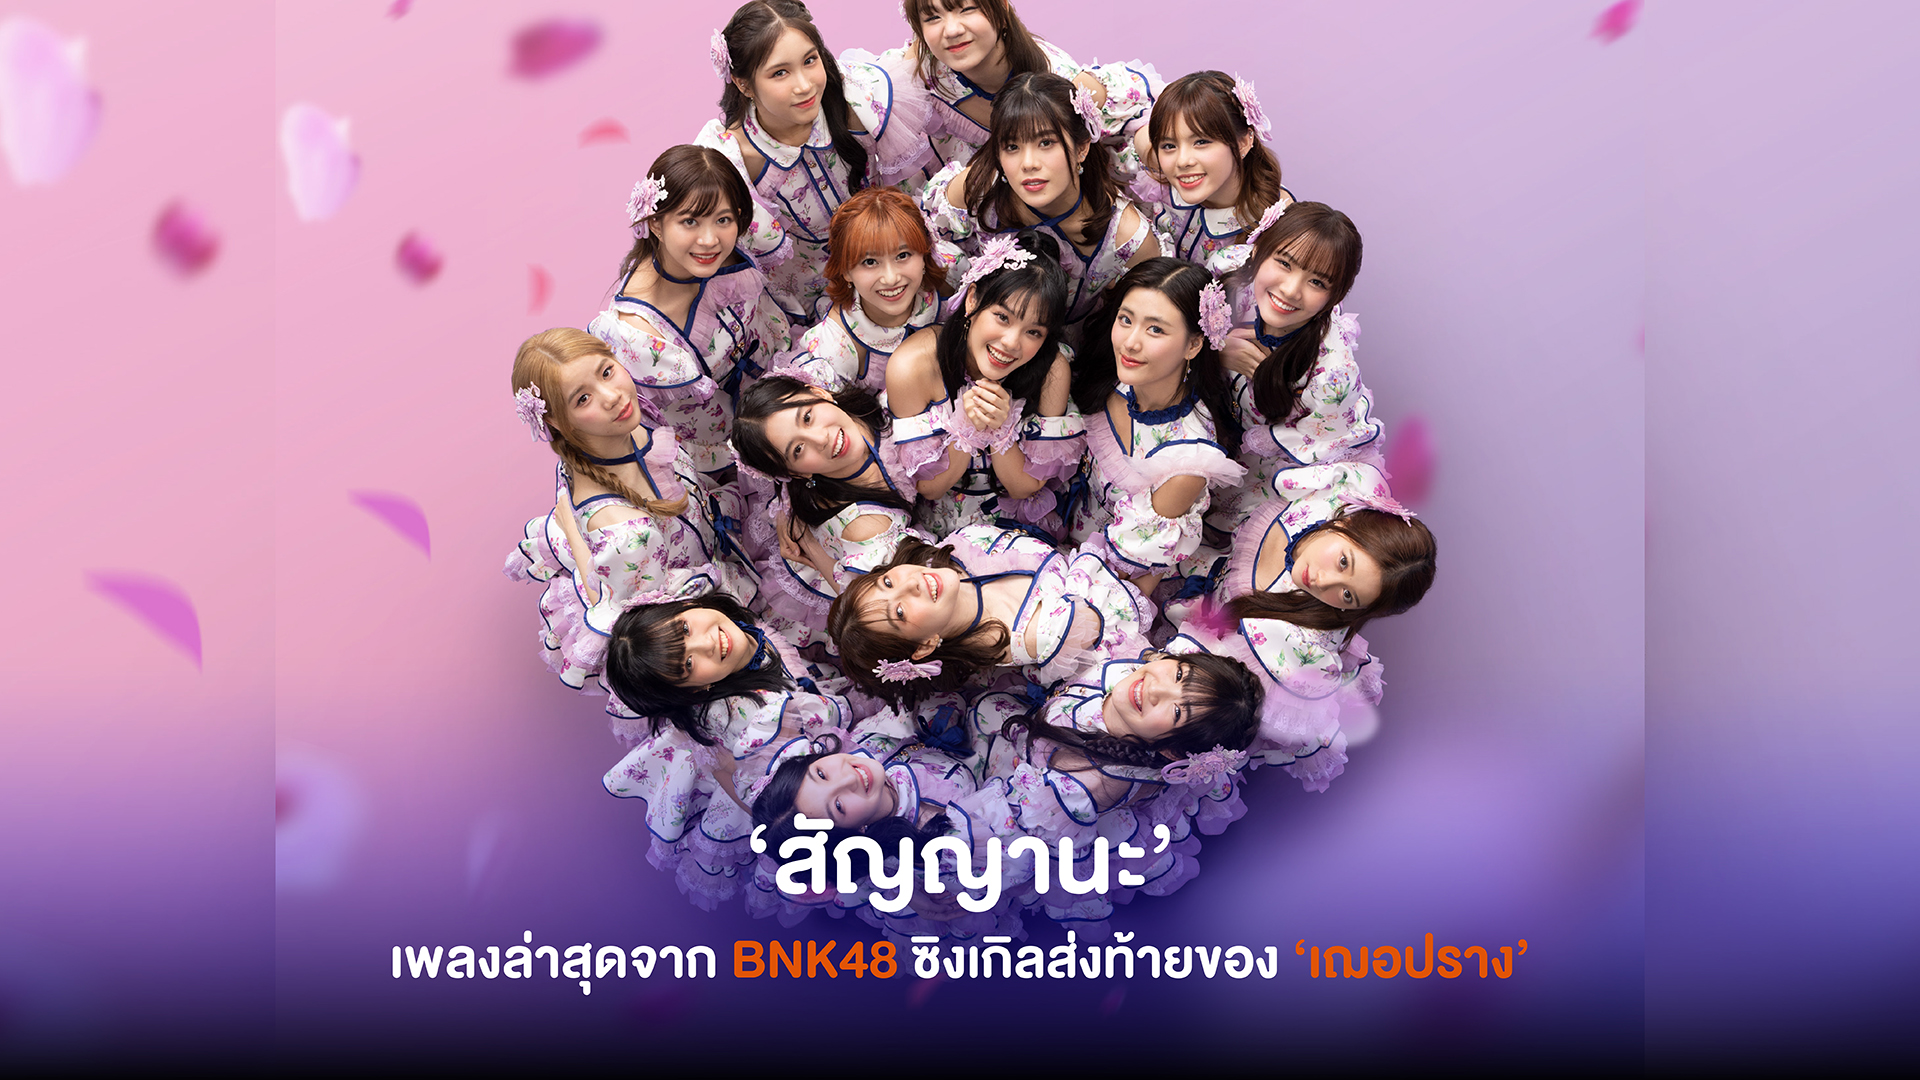 BNK48 เปิดตัว ‘สัญญานะ’ ชวนแฟนเพลงถ่าย MV ใส่เต็ม! โชว์ Performance ครั้งแรก ซิงเกิลส่งท้ายของ ‘เฌอปราง’